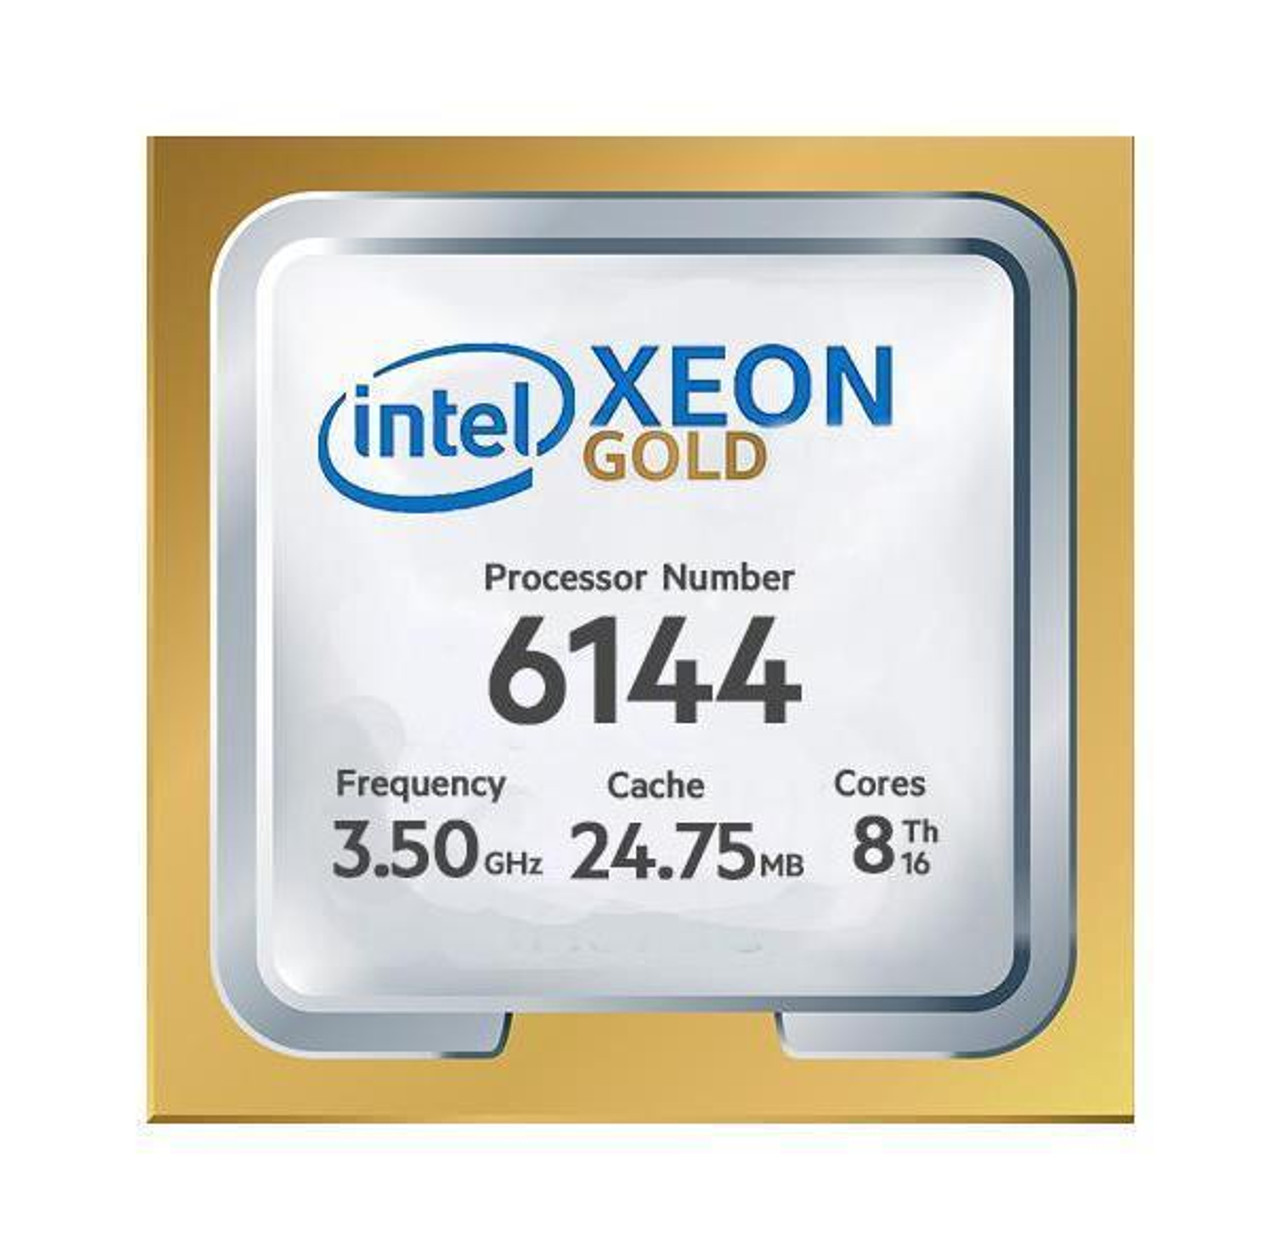 Dell CPU Kit Intel Xeon Gold 8 Core Processor 6144 3.50GHz 24.75mb L3 Cache Tdp 150w Fclga3647 For Dell Precision 7820 Tower Workstation ( T7820 ) (